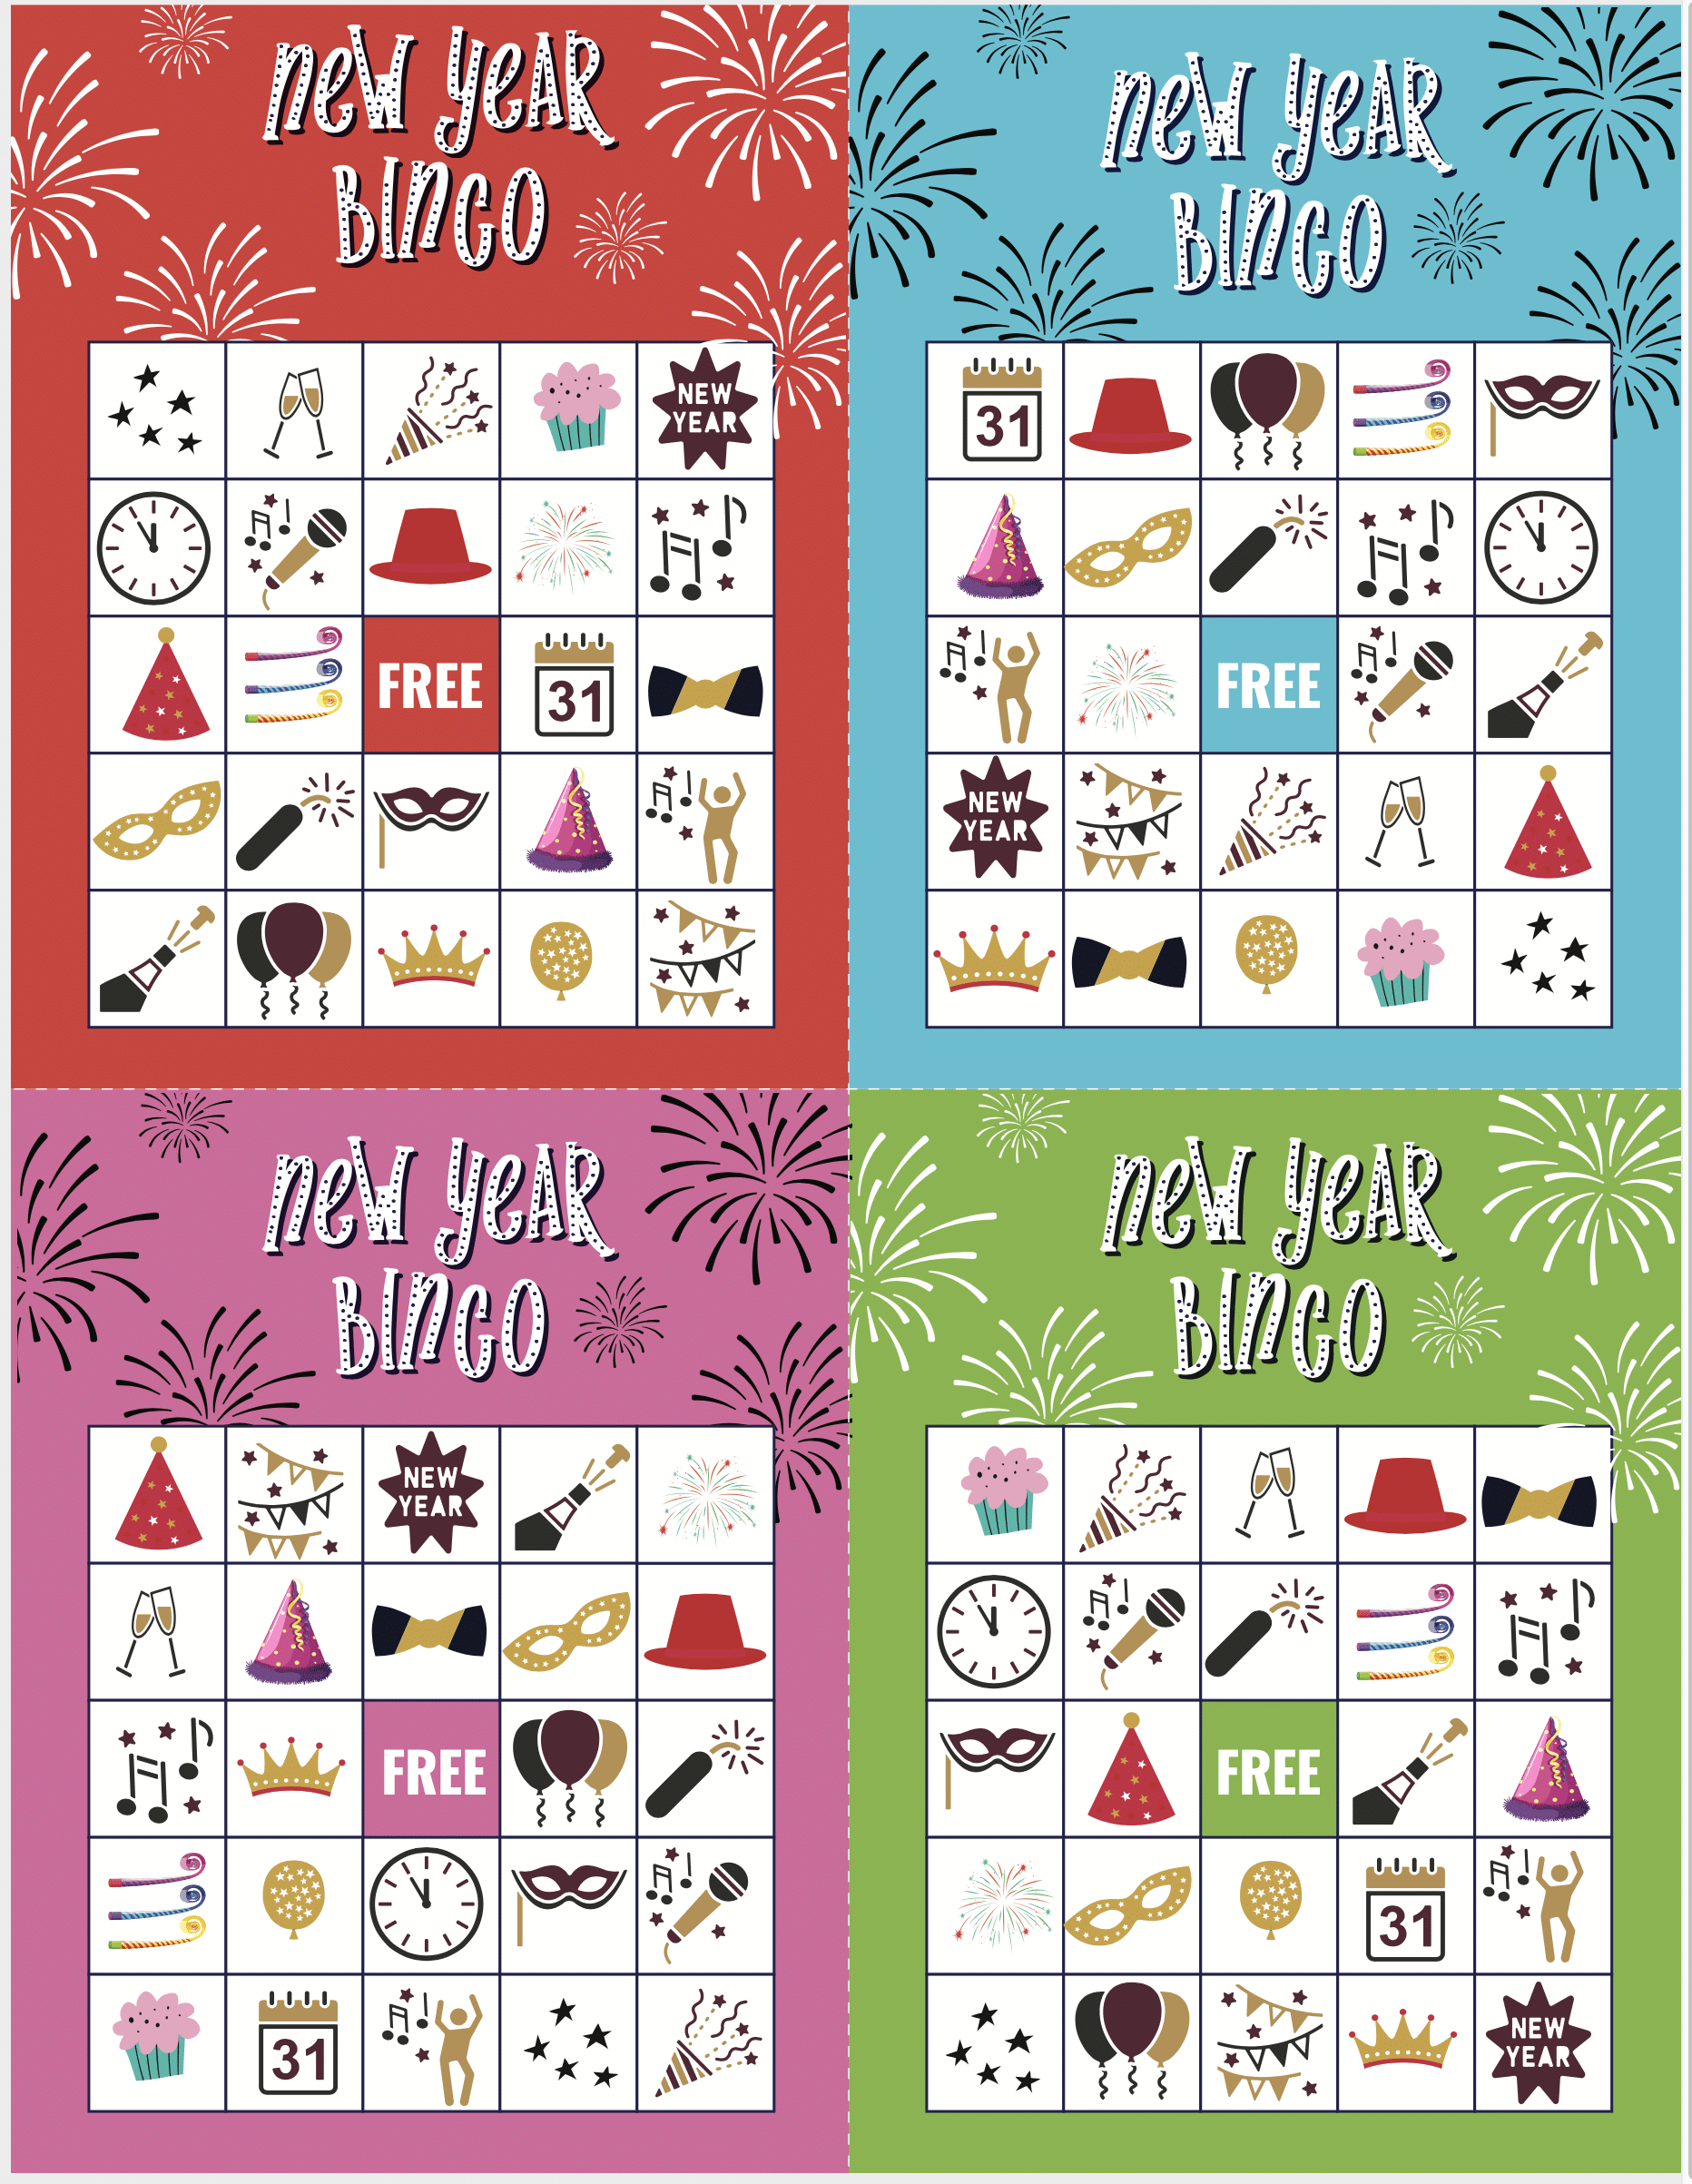 Four New Year's Eve bingo cards